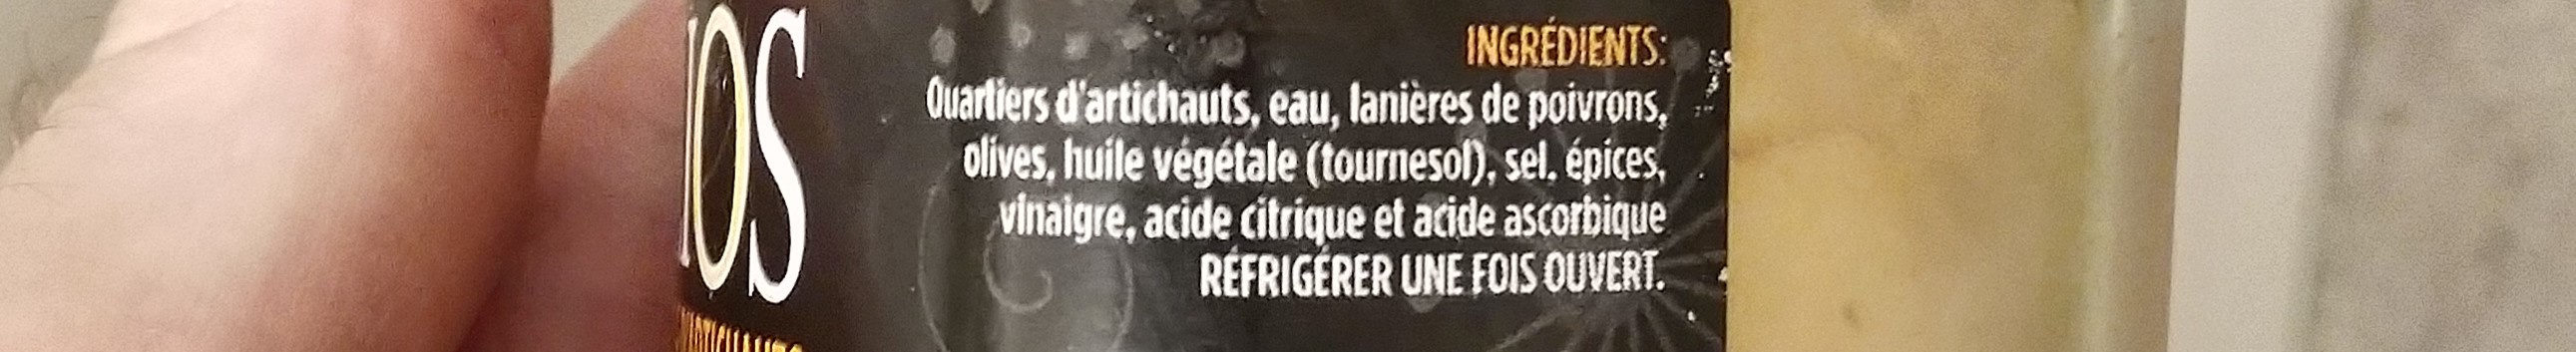 Salade d'artichauts - Ingredients - fr